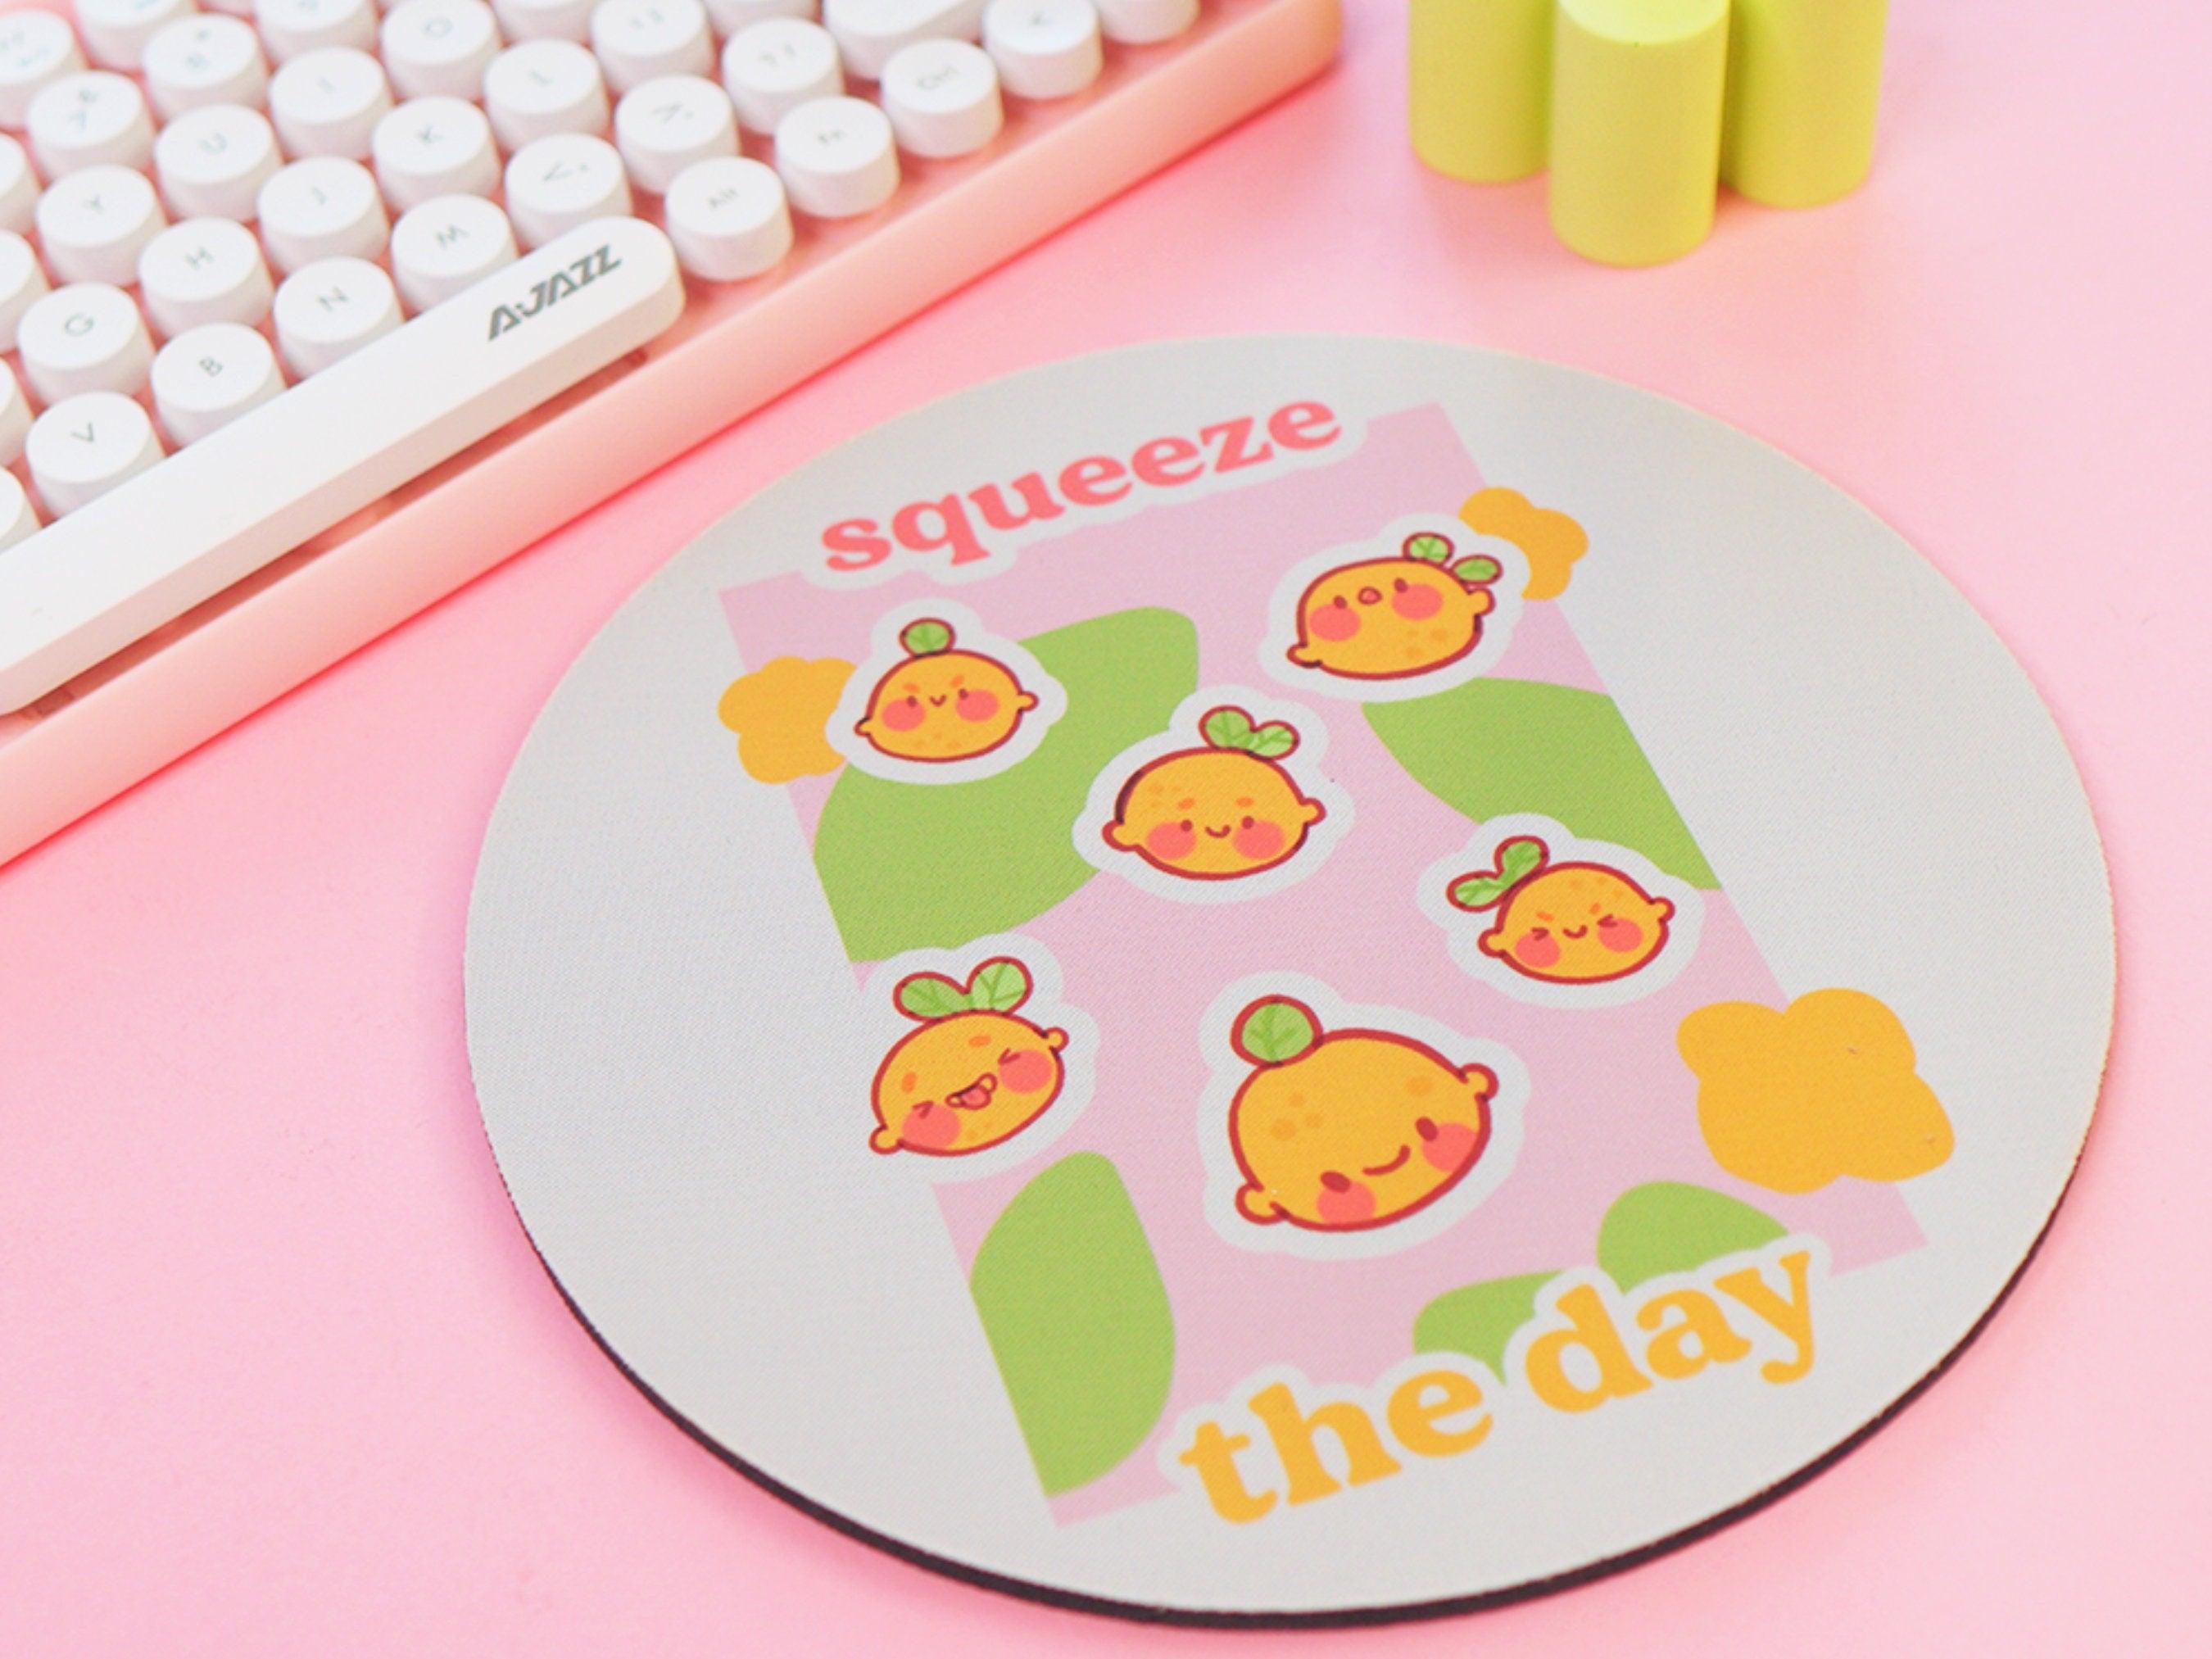 Cute Colourful Lemon Desk Mouse Mat - Katnipp Illustrations